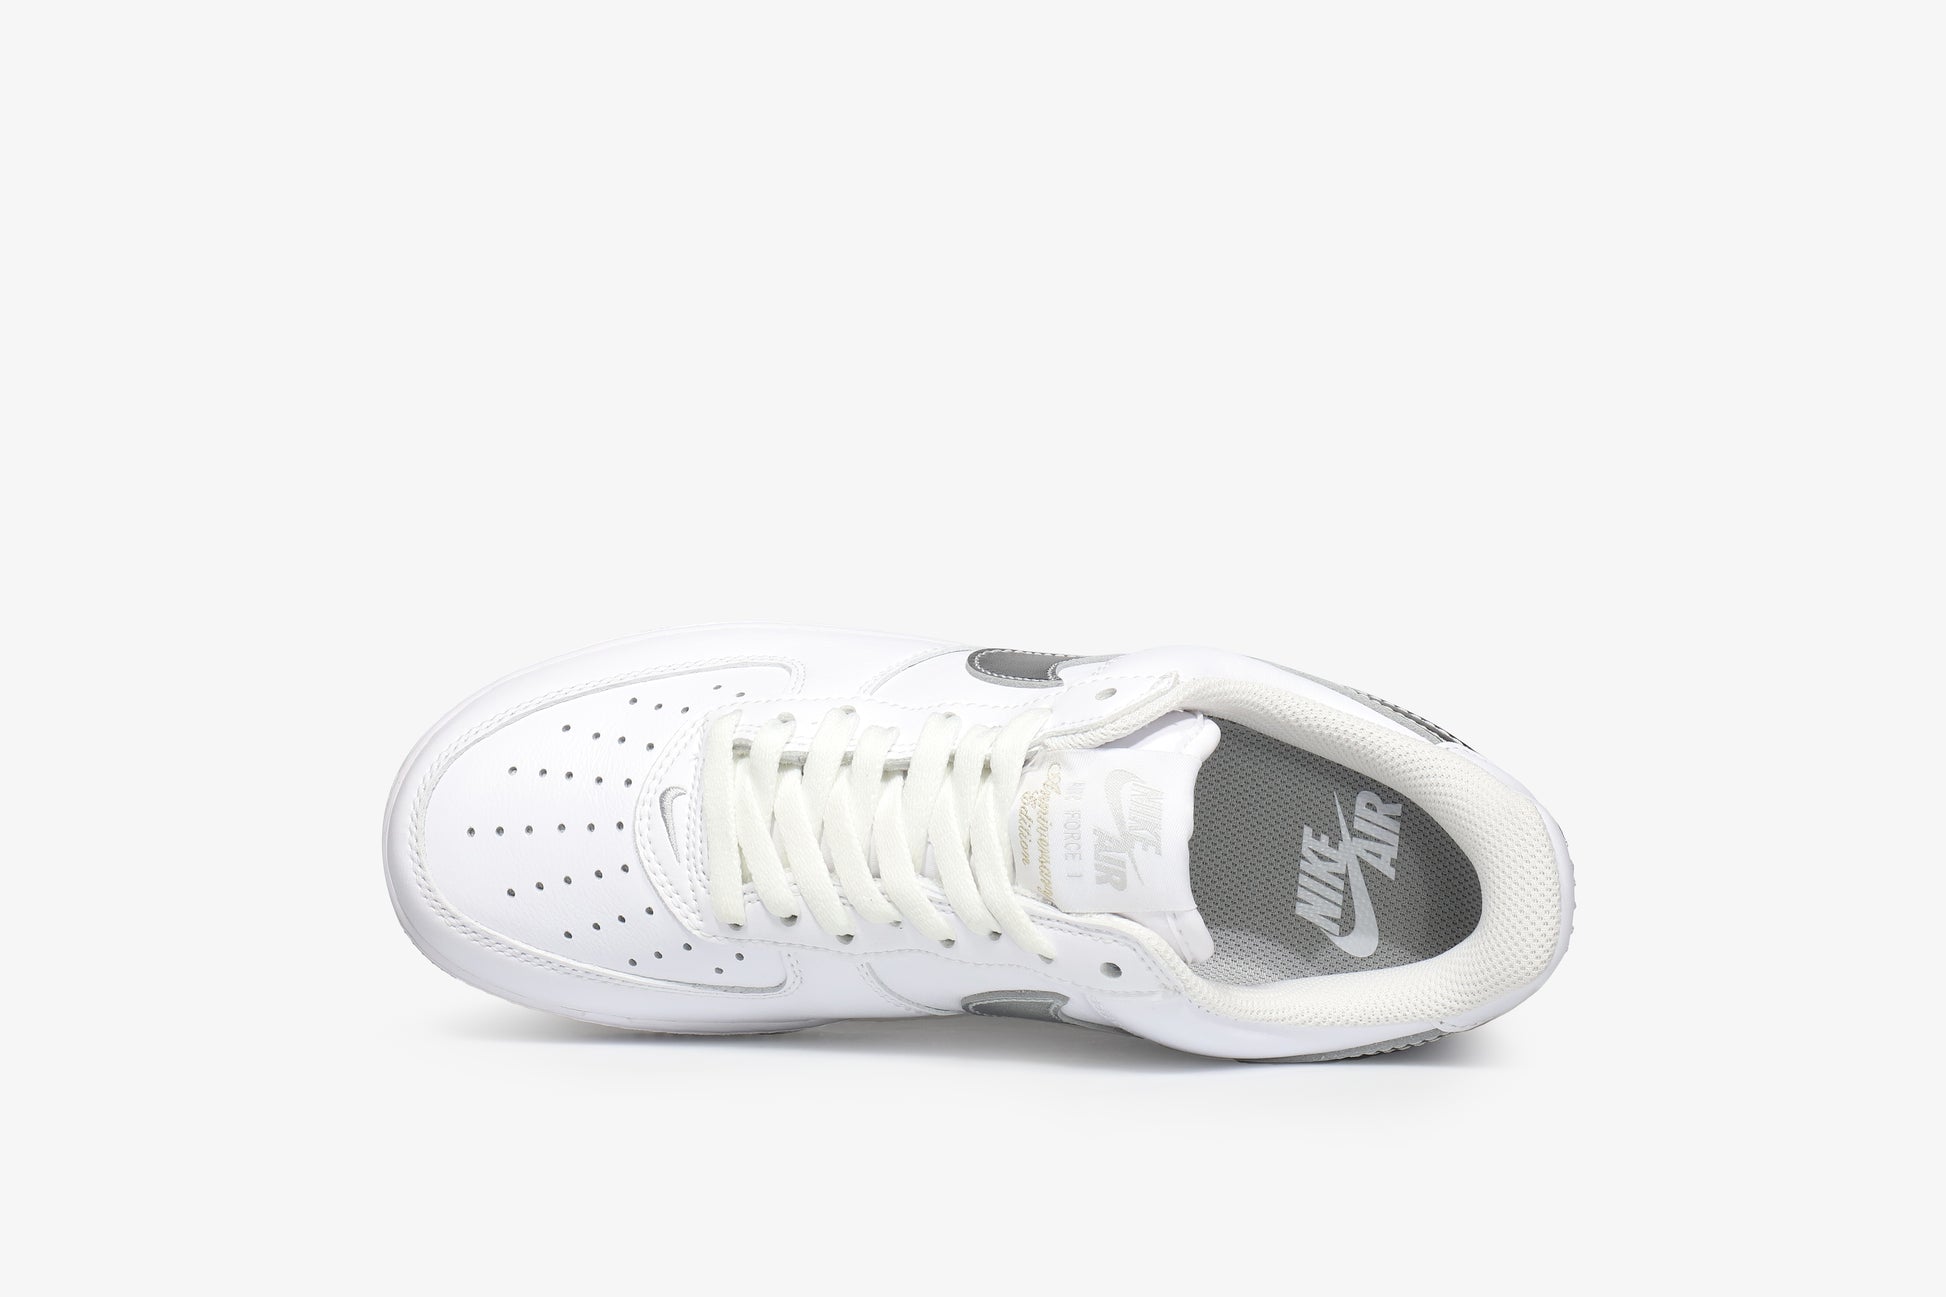 GmarShops - White x Nike Air Force 1 07 Low Dark Grey White Silver